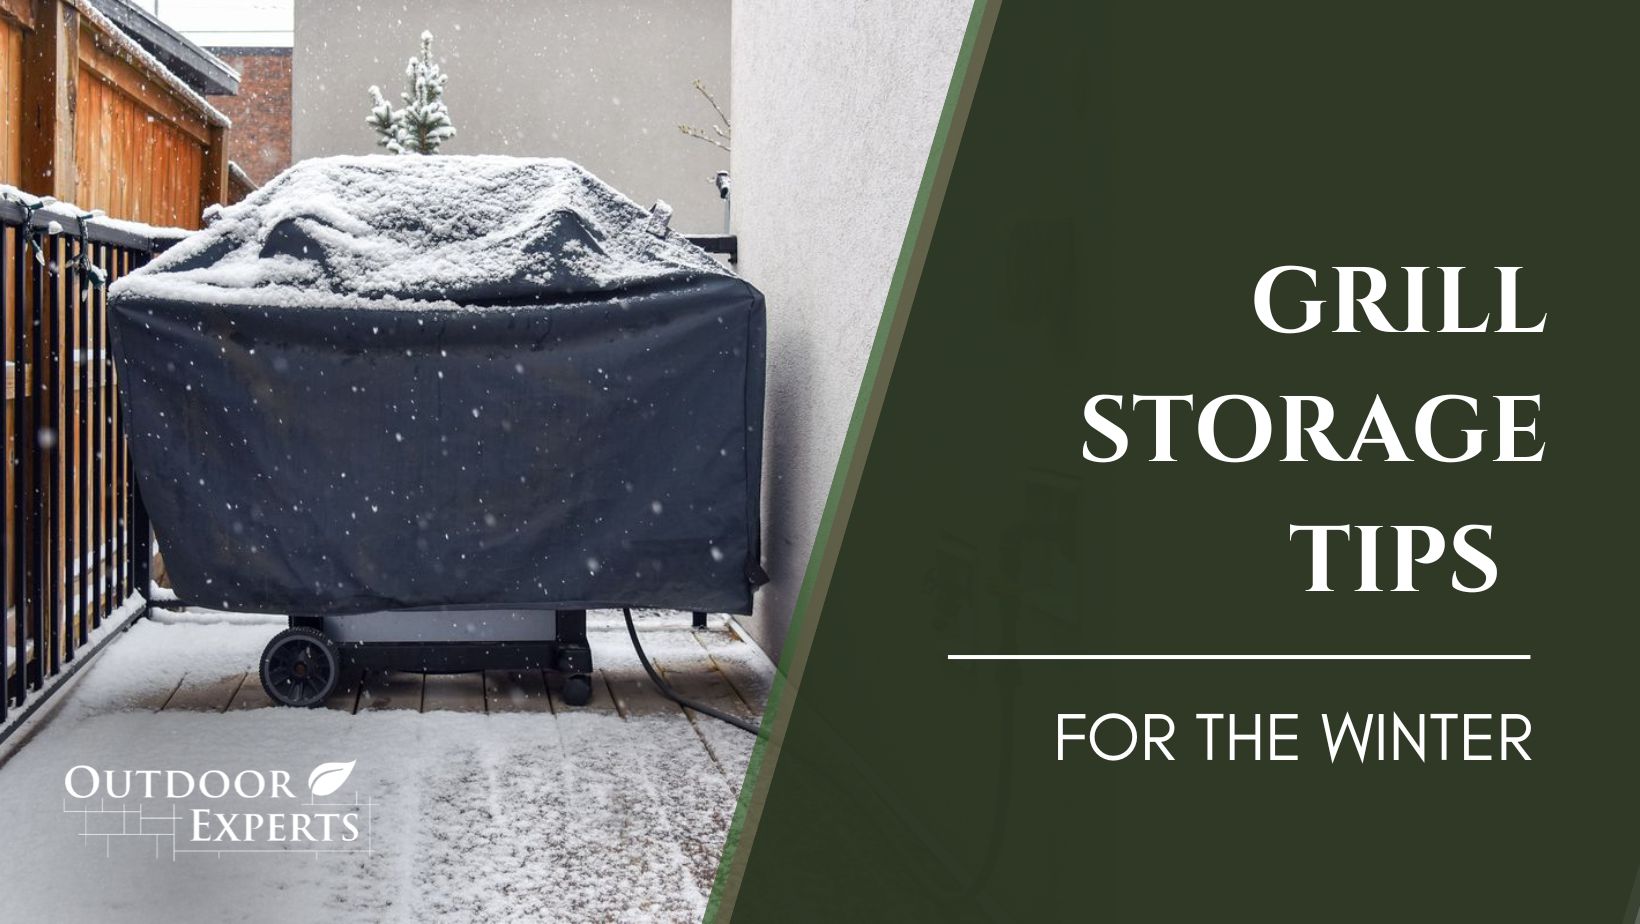 II. Importance of Proper Grill Storage in Winter